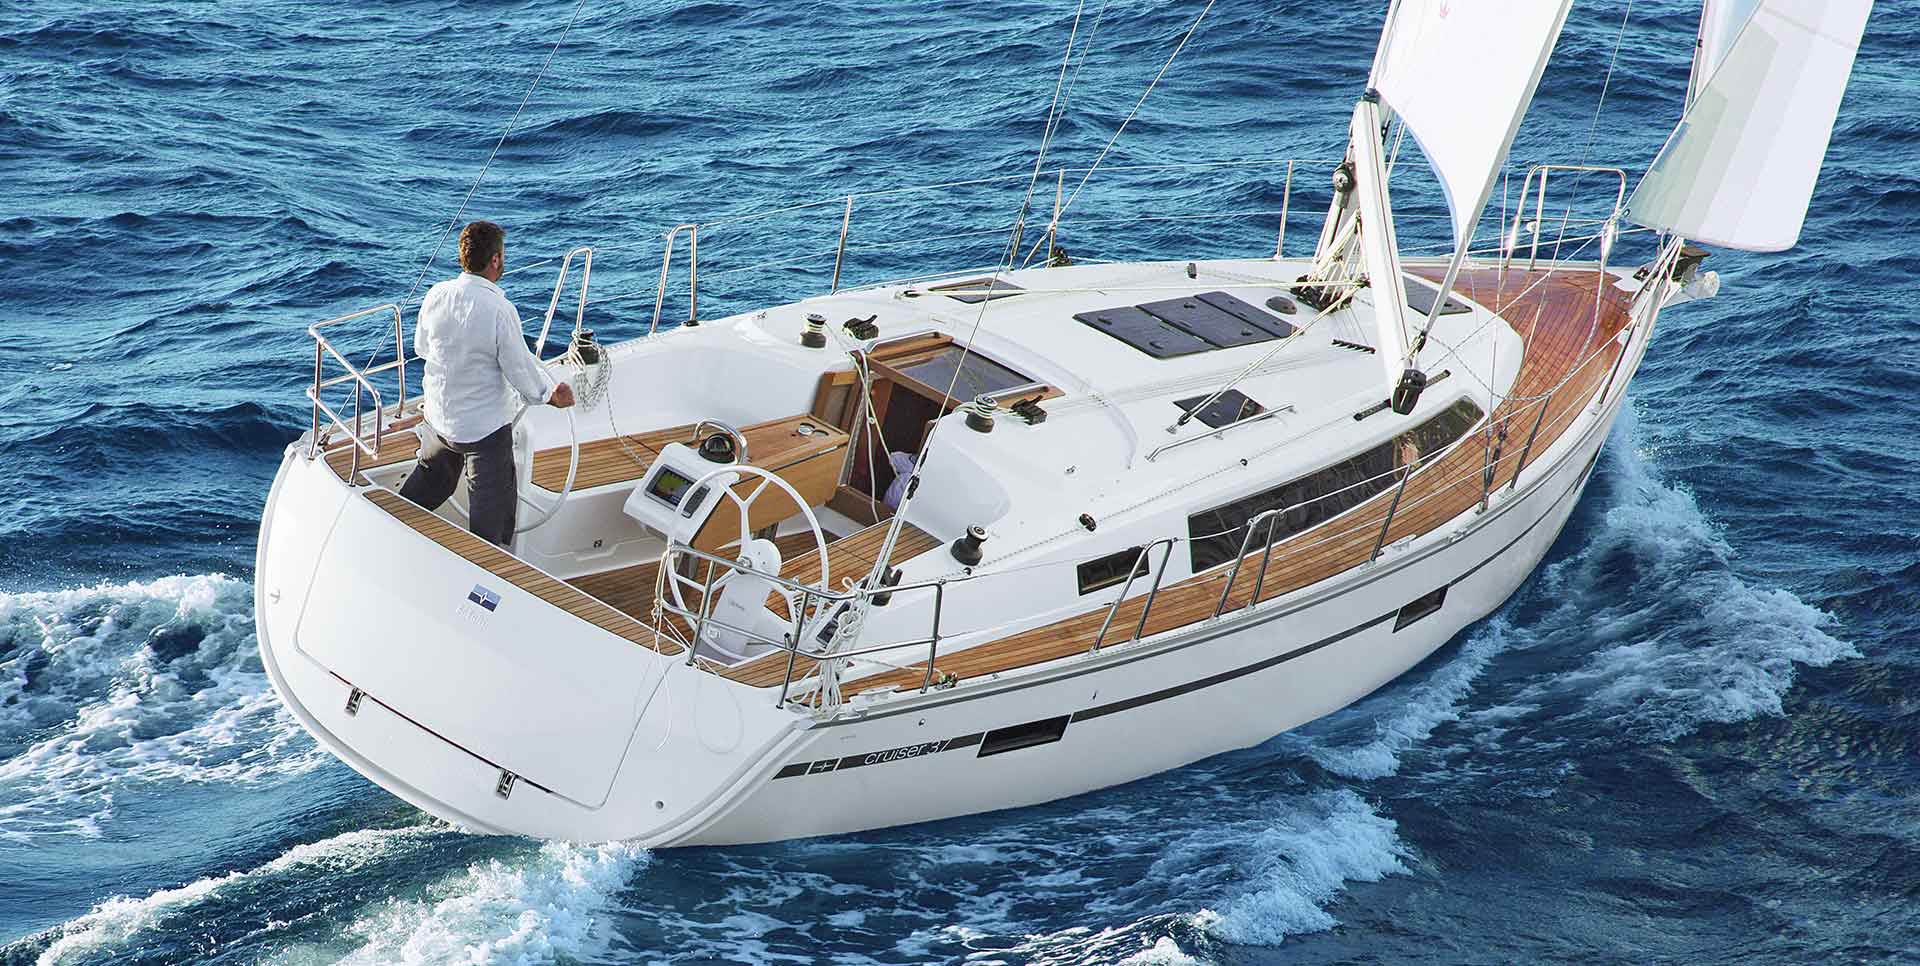 Sail boat FOR CHARTER, year 2021 brand Bavaria and model 37, available in Marina de Denia Denia Alicante España